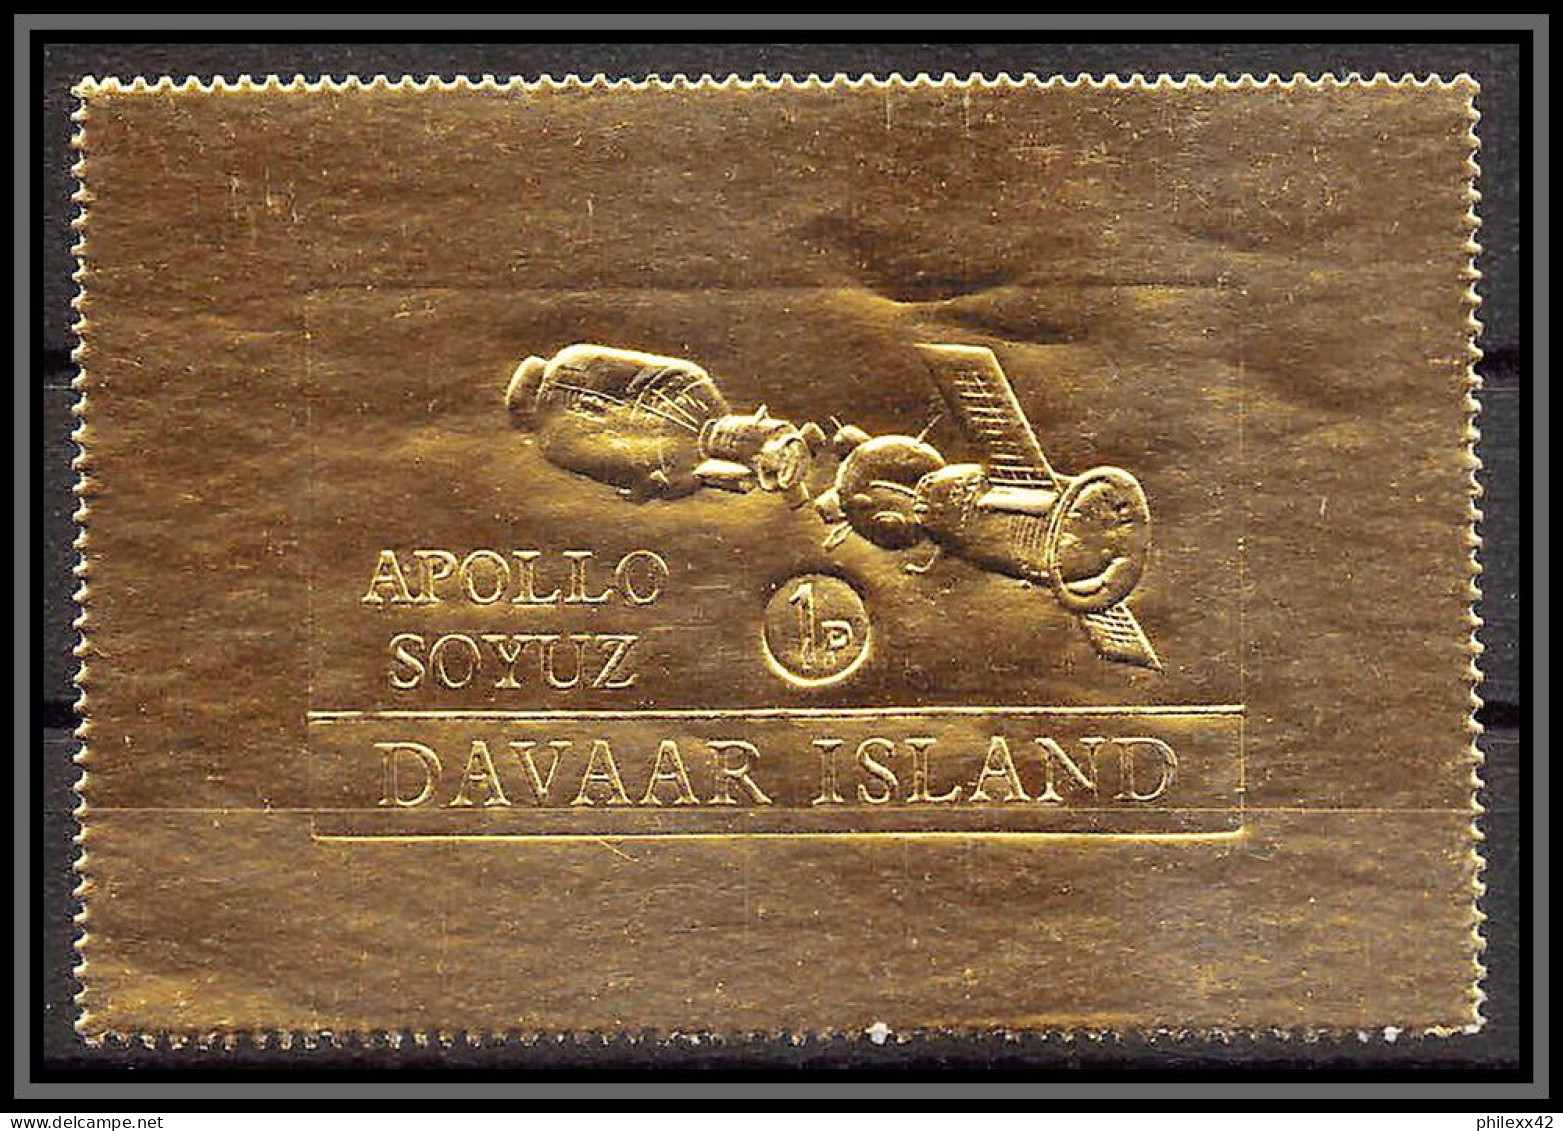 310b Davaar Scotland Apollo 1 P Soyuz (soyouz Sojus) Timbres OR Gold Stamps Géant Large - Schotland